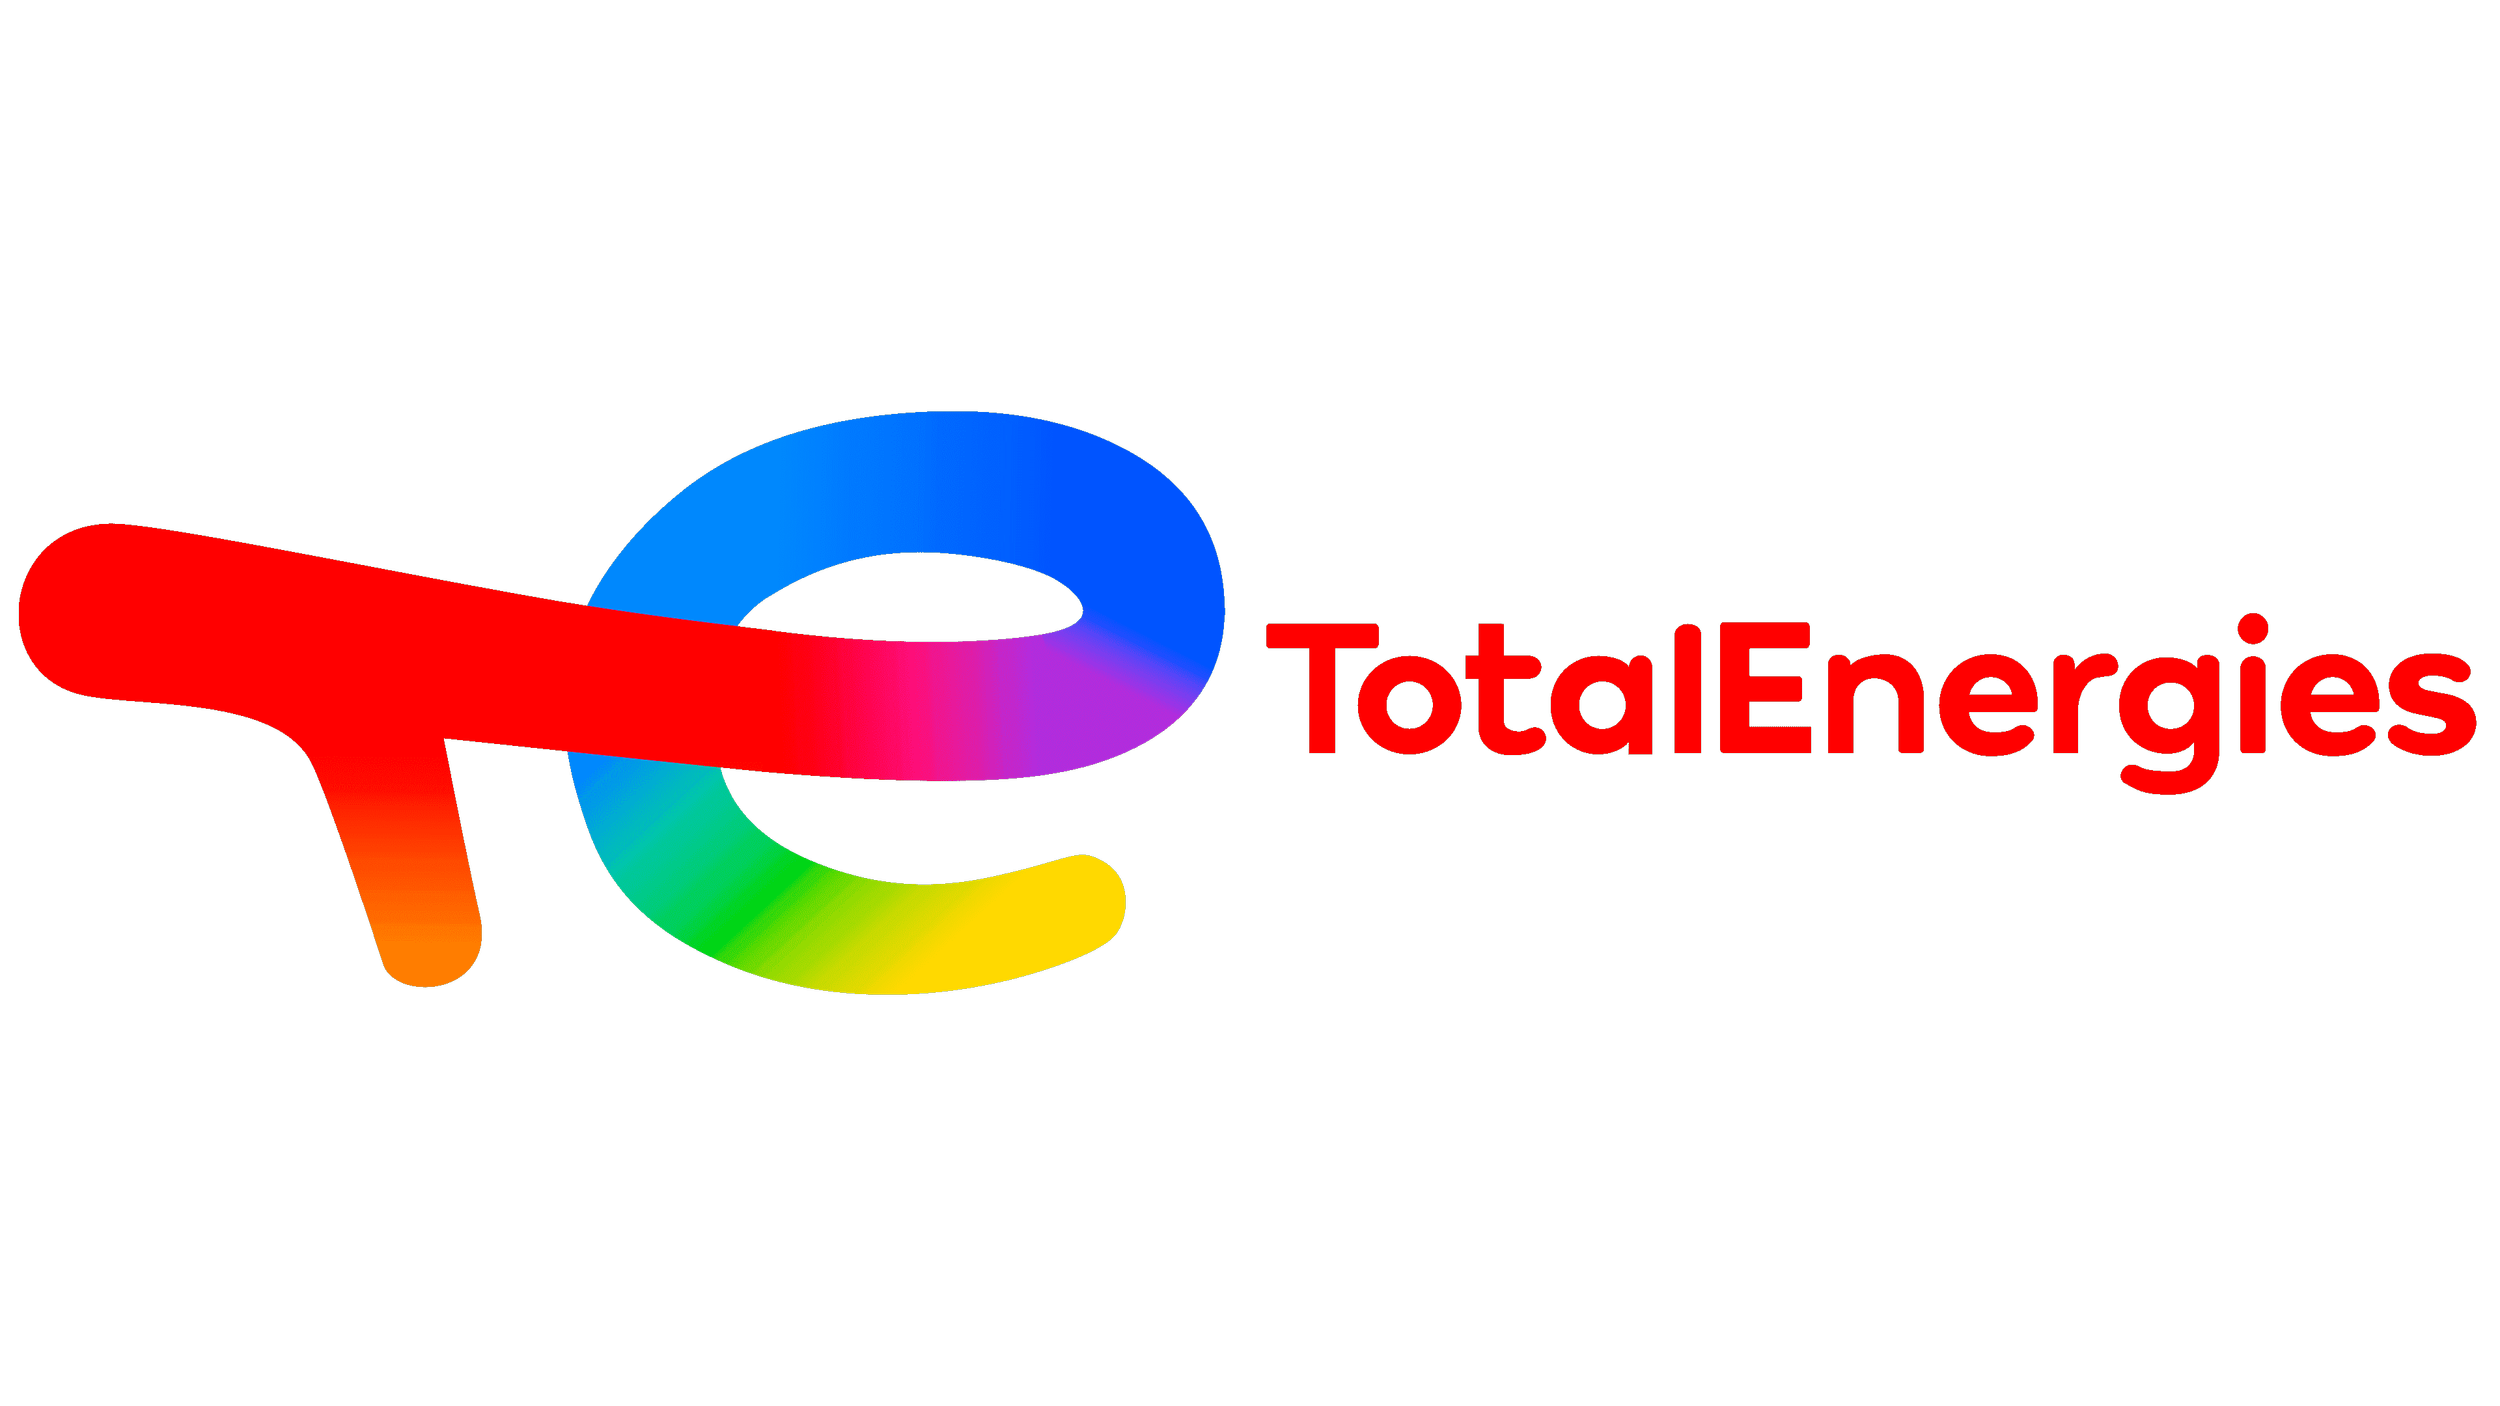 Total-Energies-Logo.png